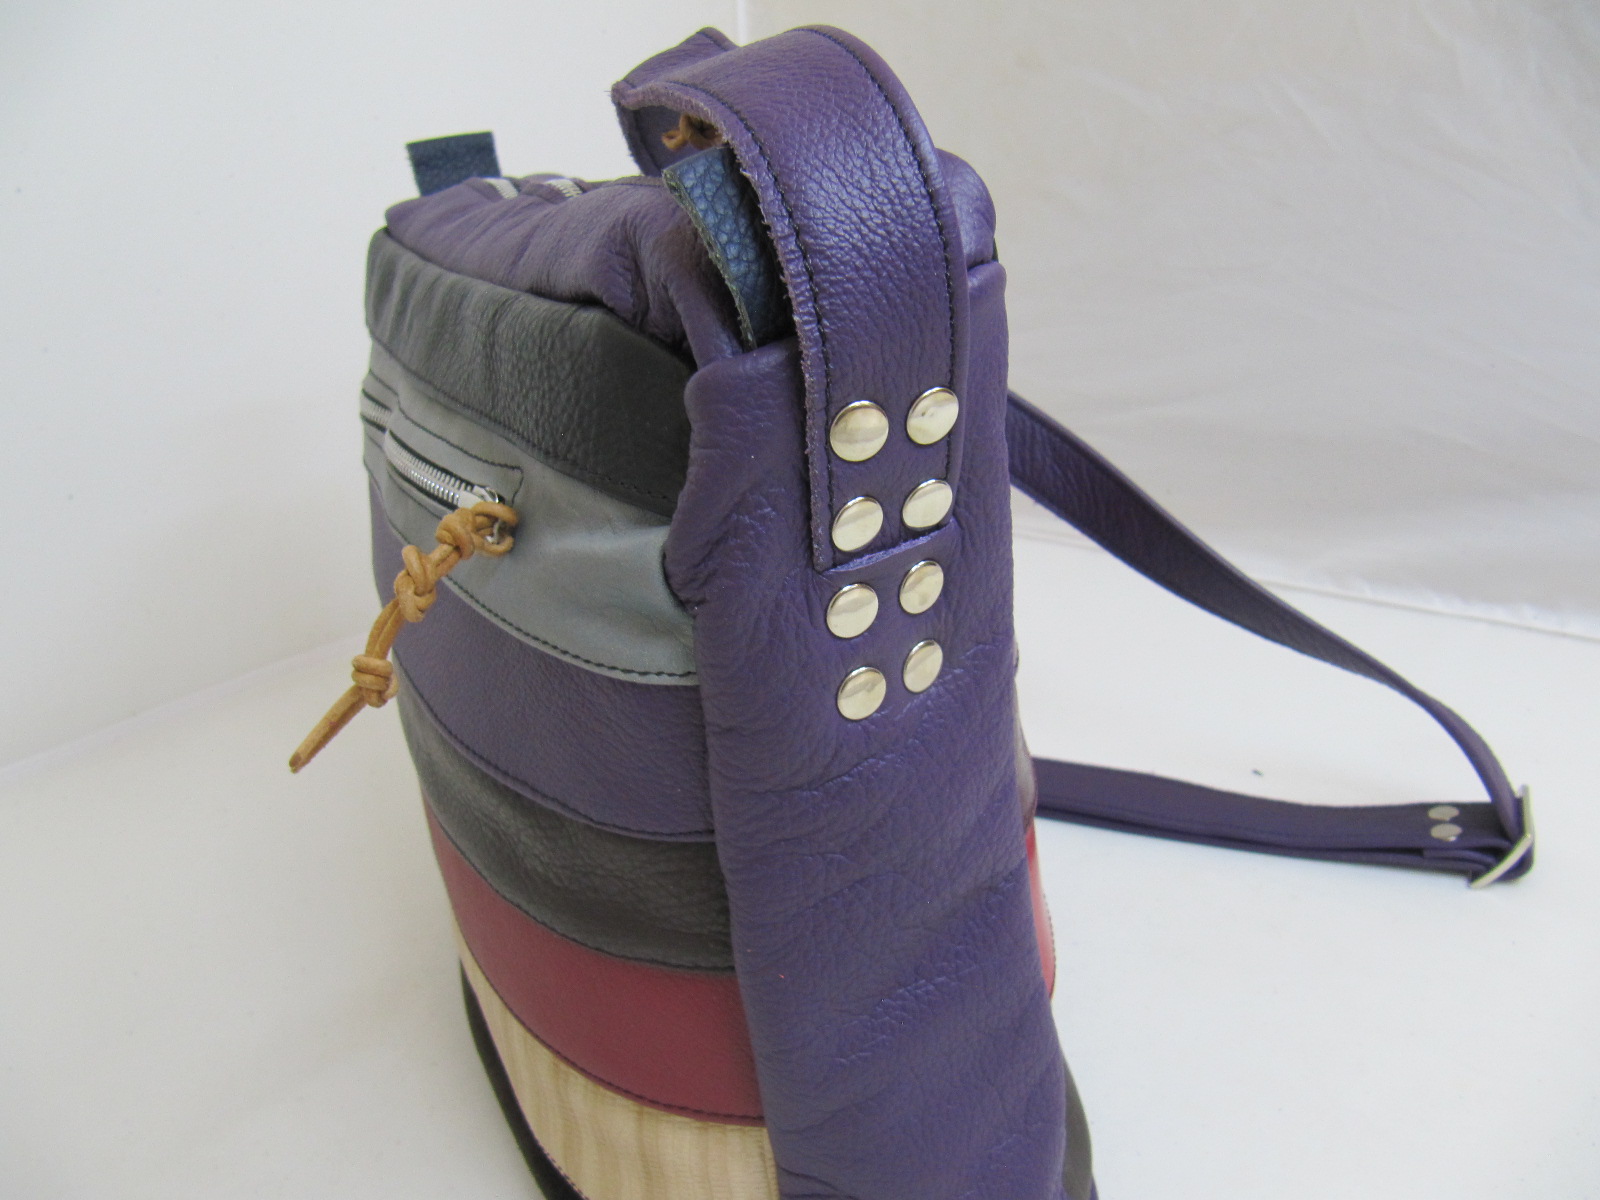 Leather stripe handbag in purples